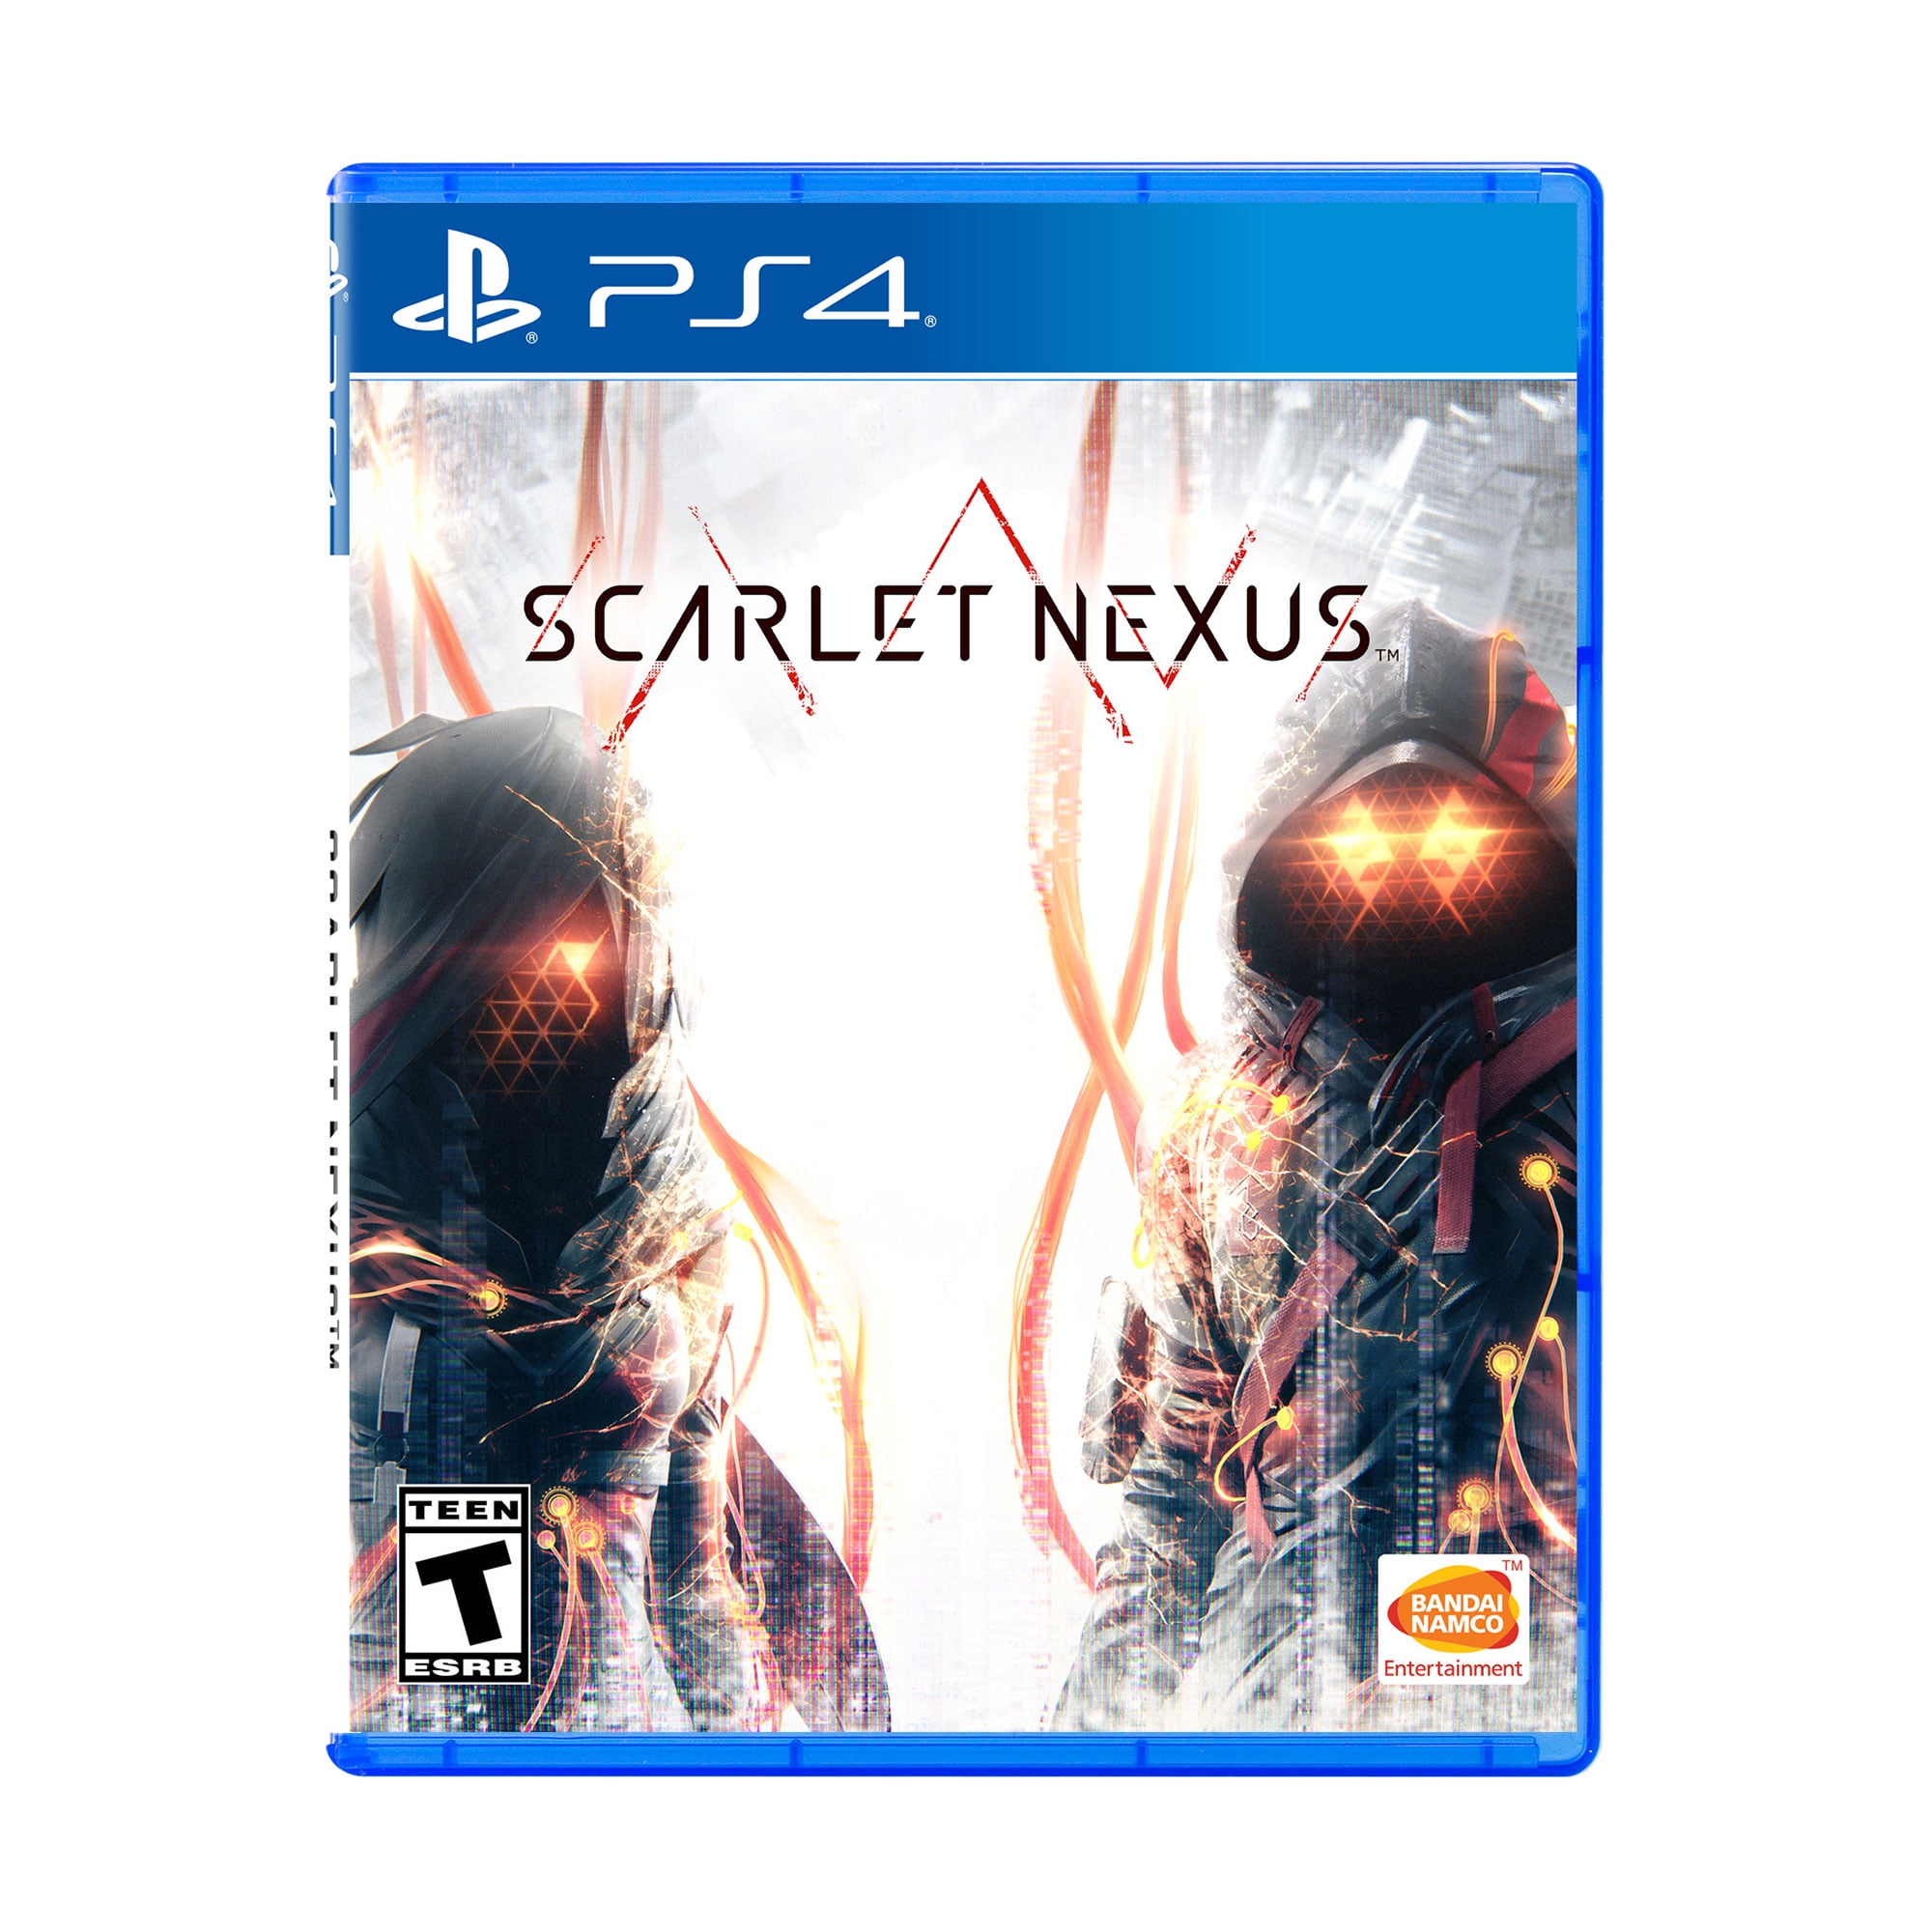 Scarlet Nexus' Sequel Should Lean More into the Dual Narrative